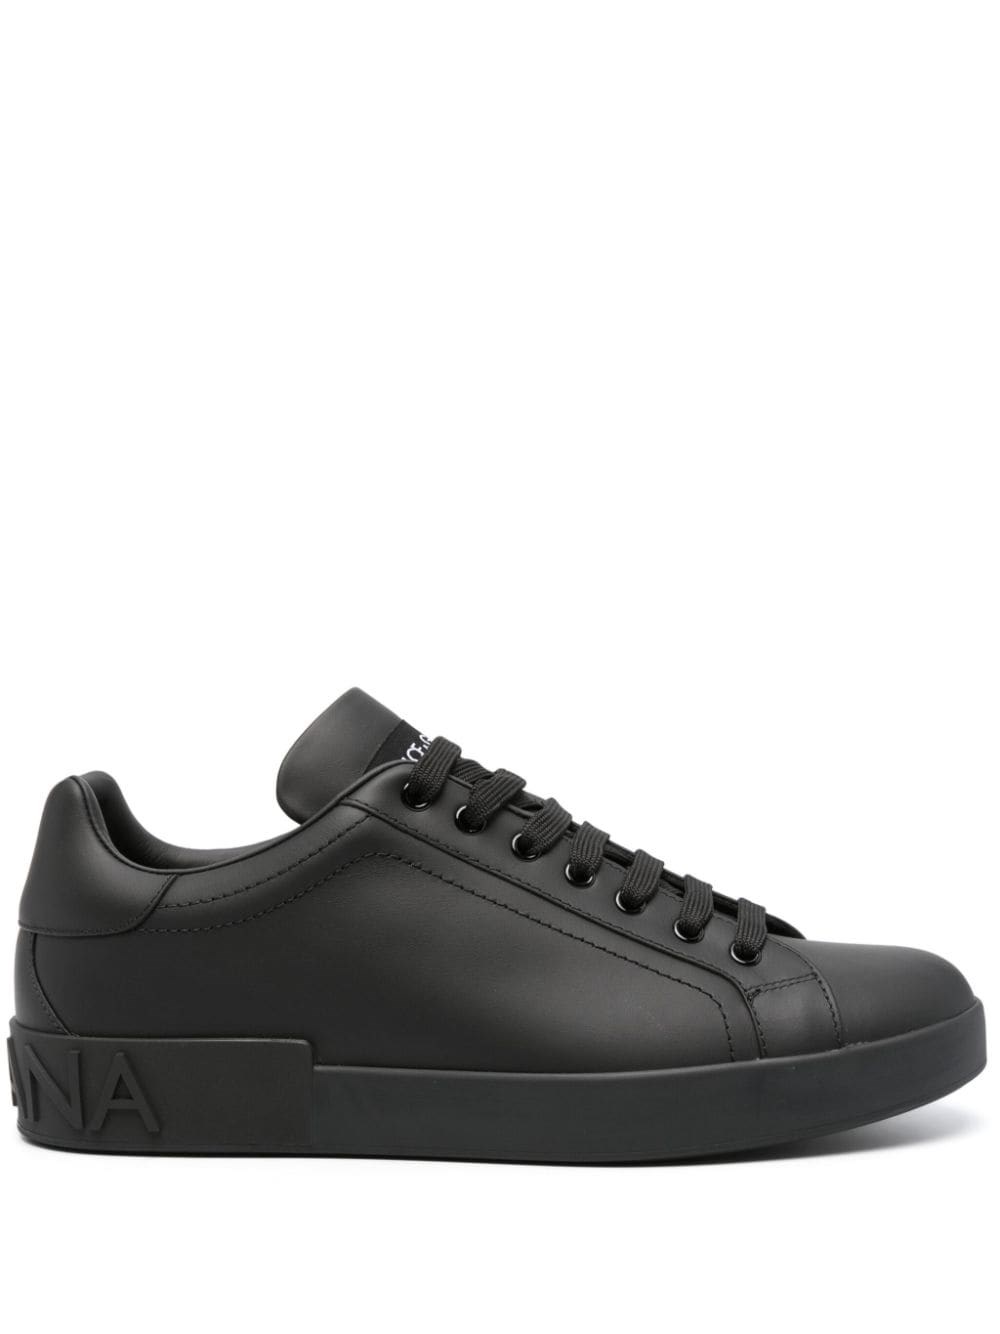 Dolce & Gabbana Leather Sneaker In Black